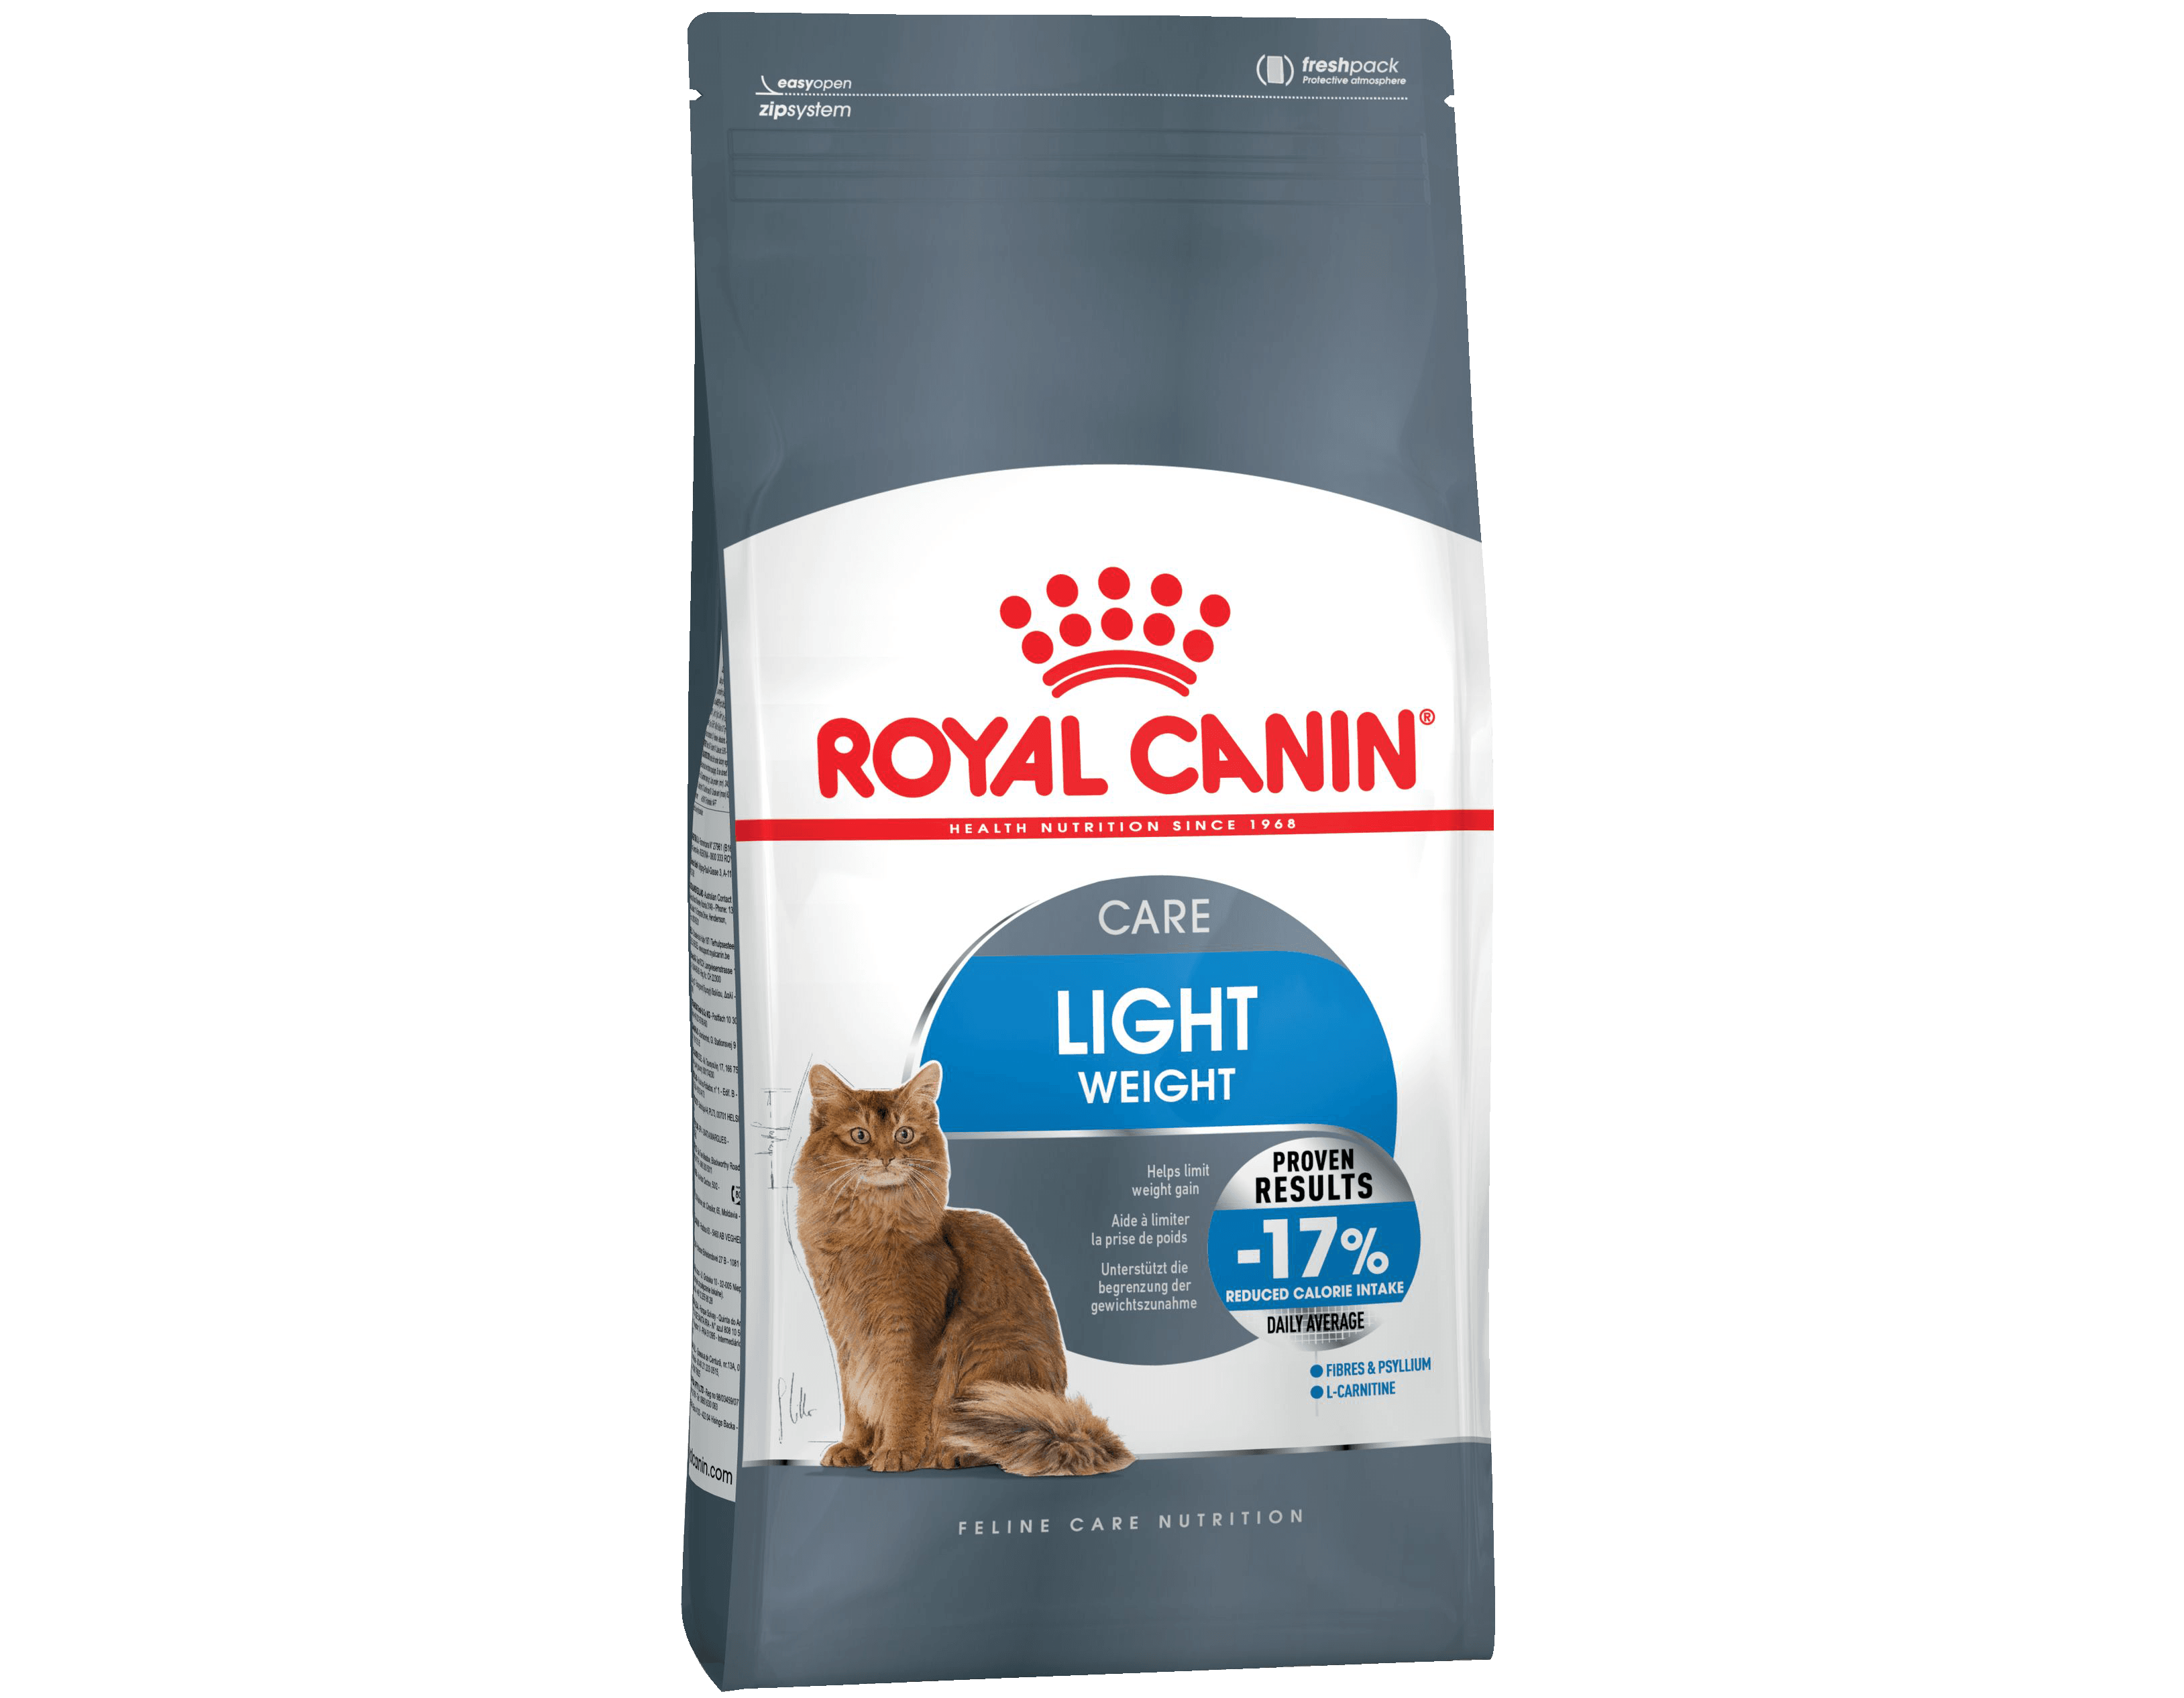 Royal canin для кошек 2кг. Роял Канин Digestive Care для кошек. Корм д/кошек сух Royal Canin (Роял Канин) ФКН Дайджестив Кэа с рыбой Колечки. Роял Канин Лайт Уэйт Кеа 400г.. Роял Канин Hairball Care.